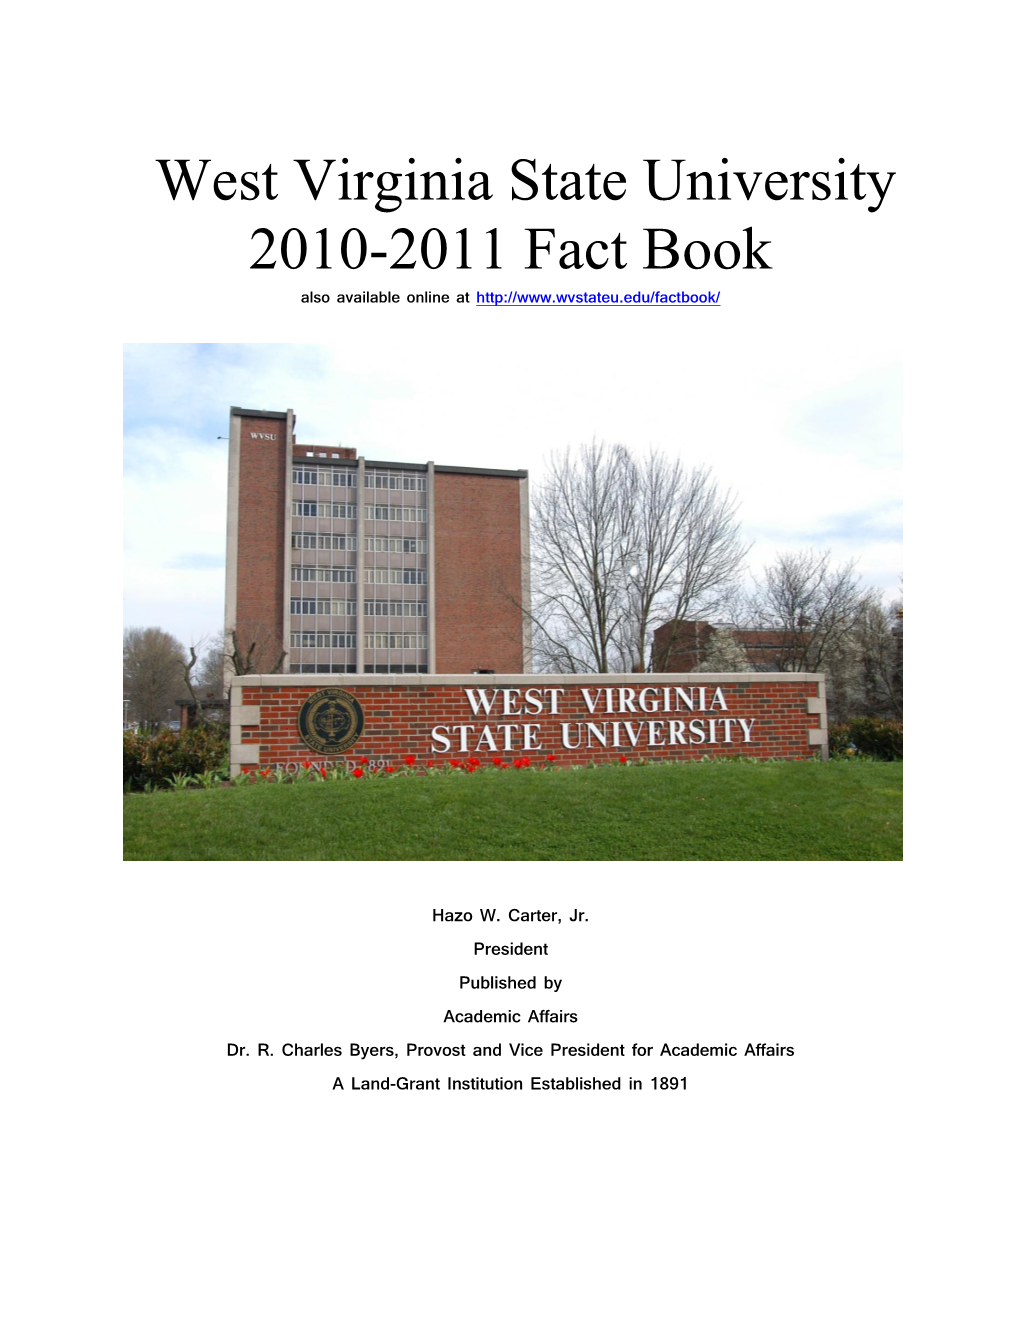 West Virginia State University 2010-2011 Fact Book